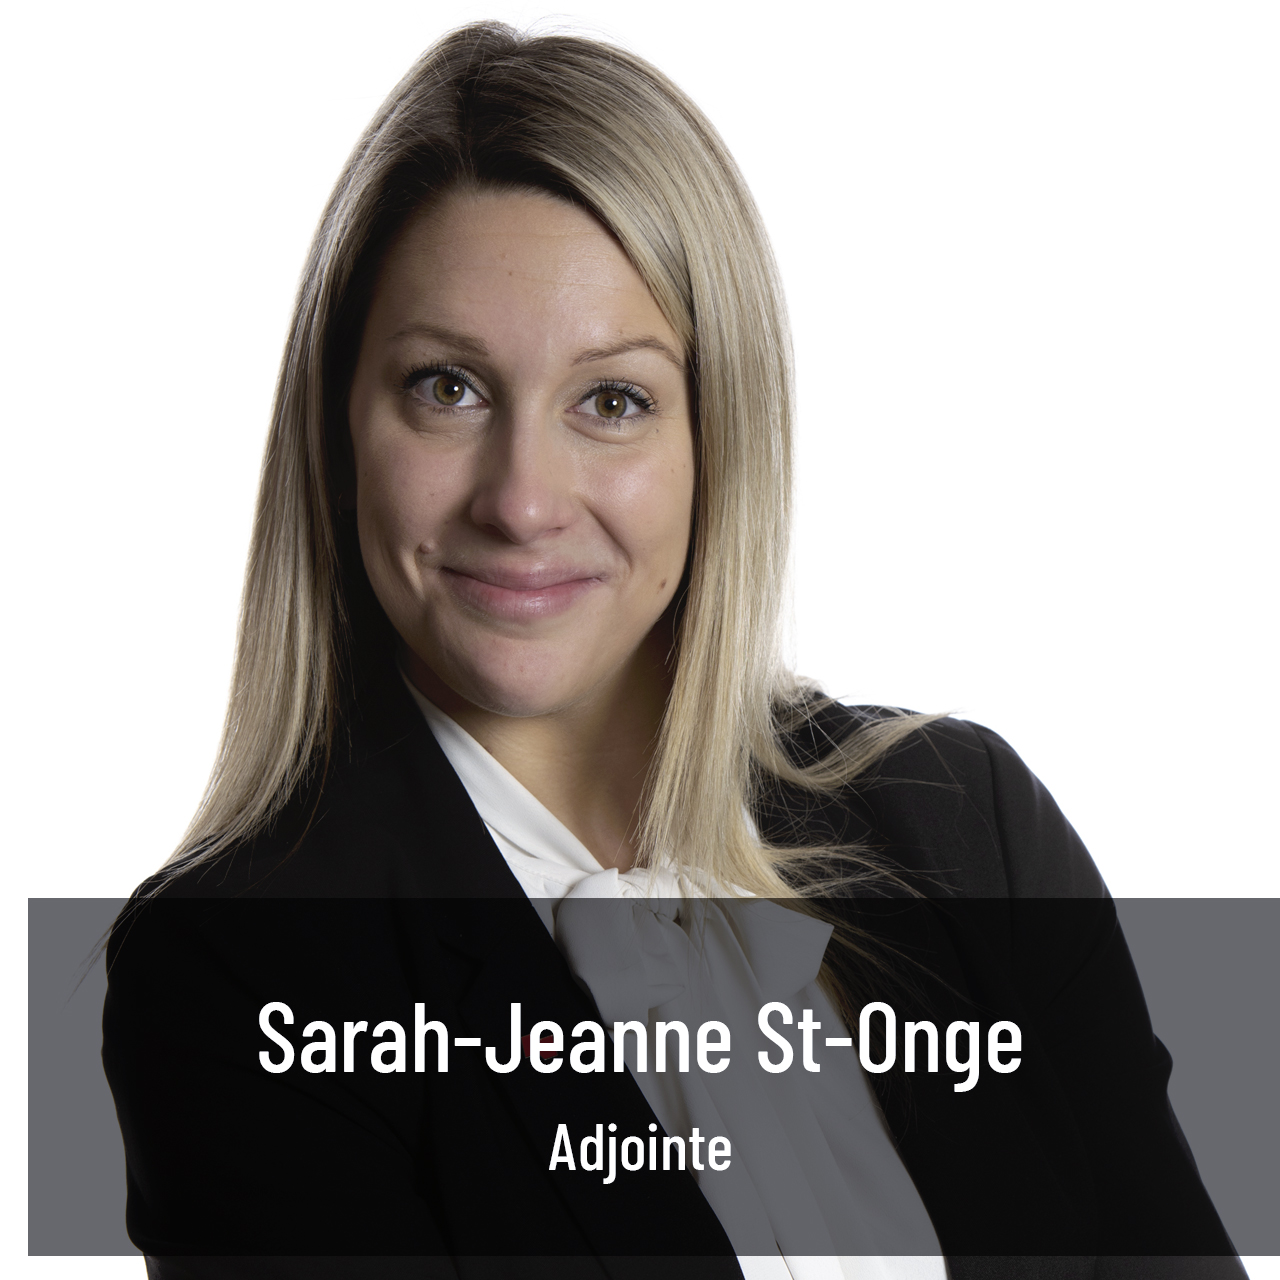 Sarah-Jeanne St-Onge